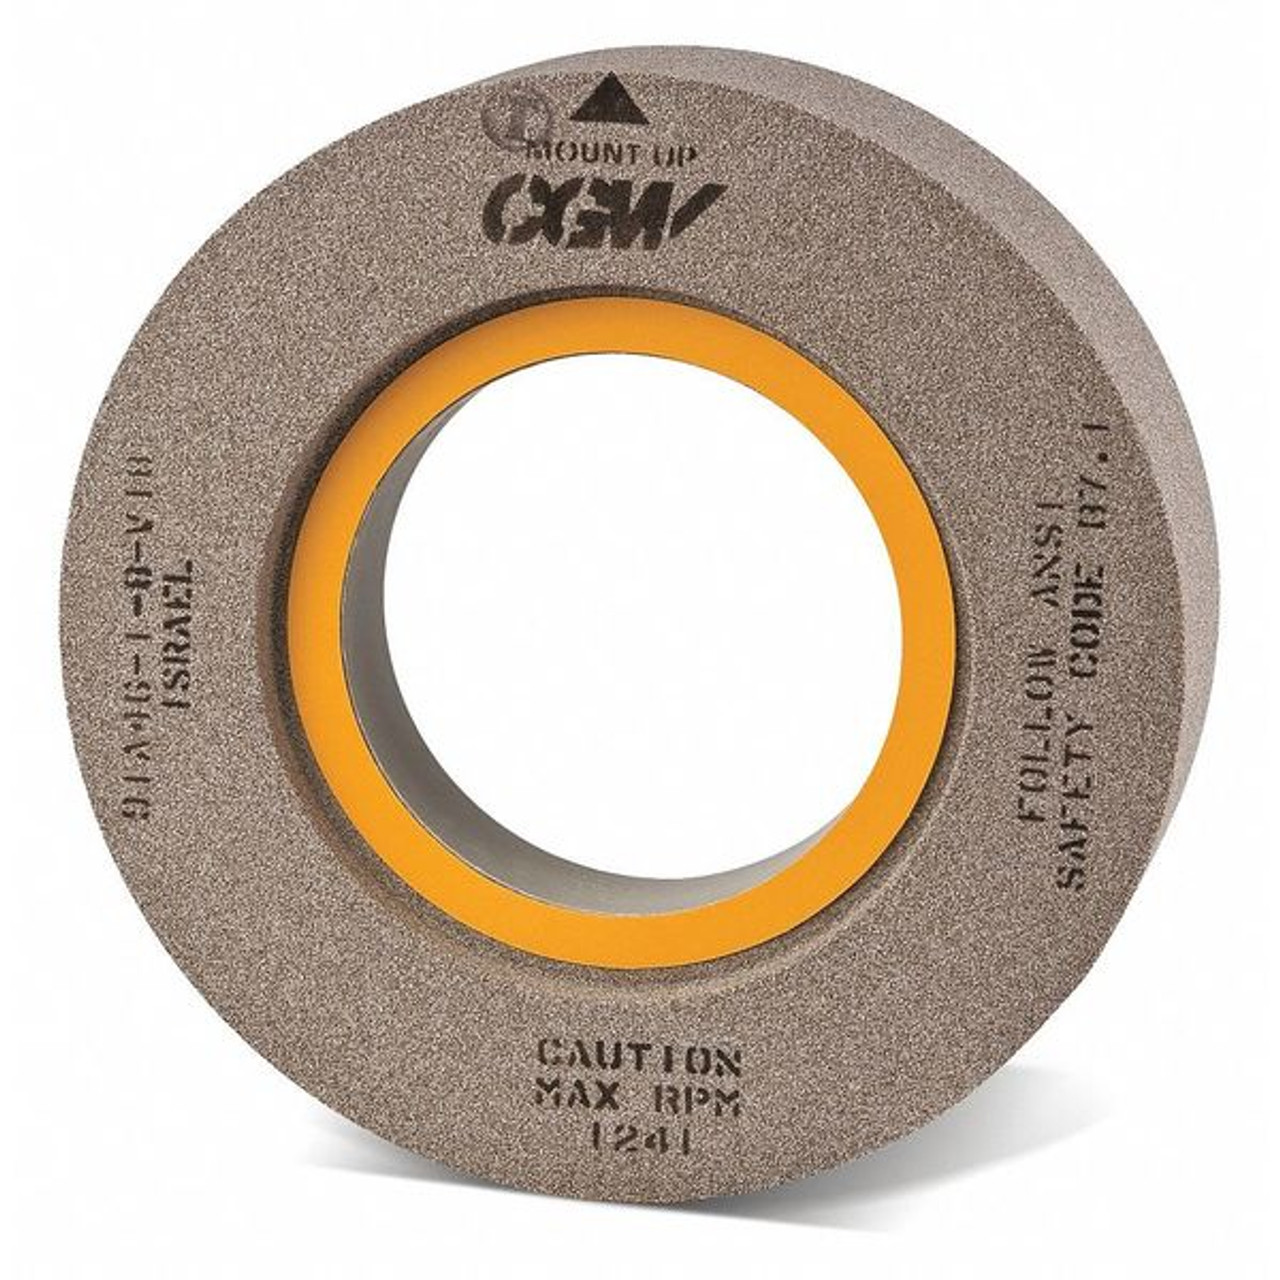 CGW Precision Grinding (Vitrified Wheels) 18X2X8, T7, 91A46-I8-VN18, 34003, 2pk